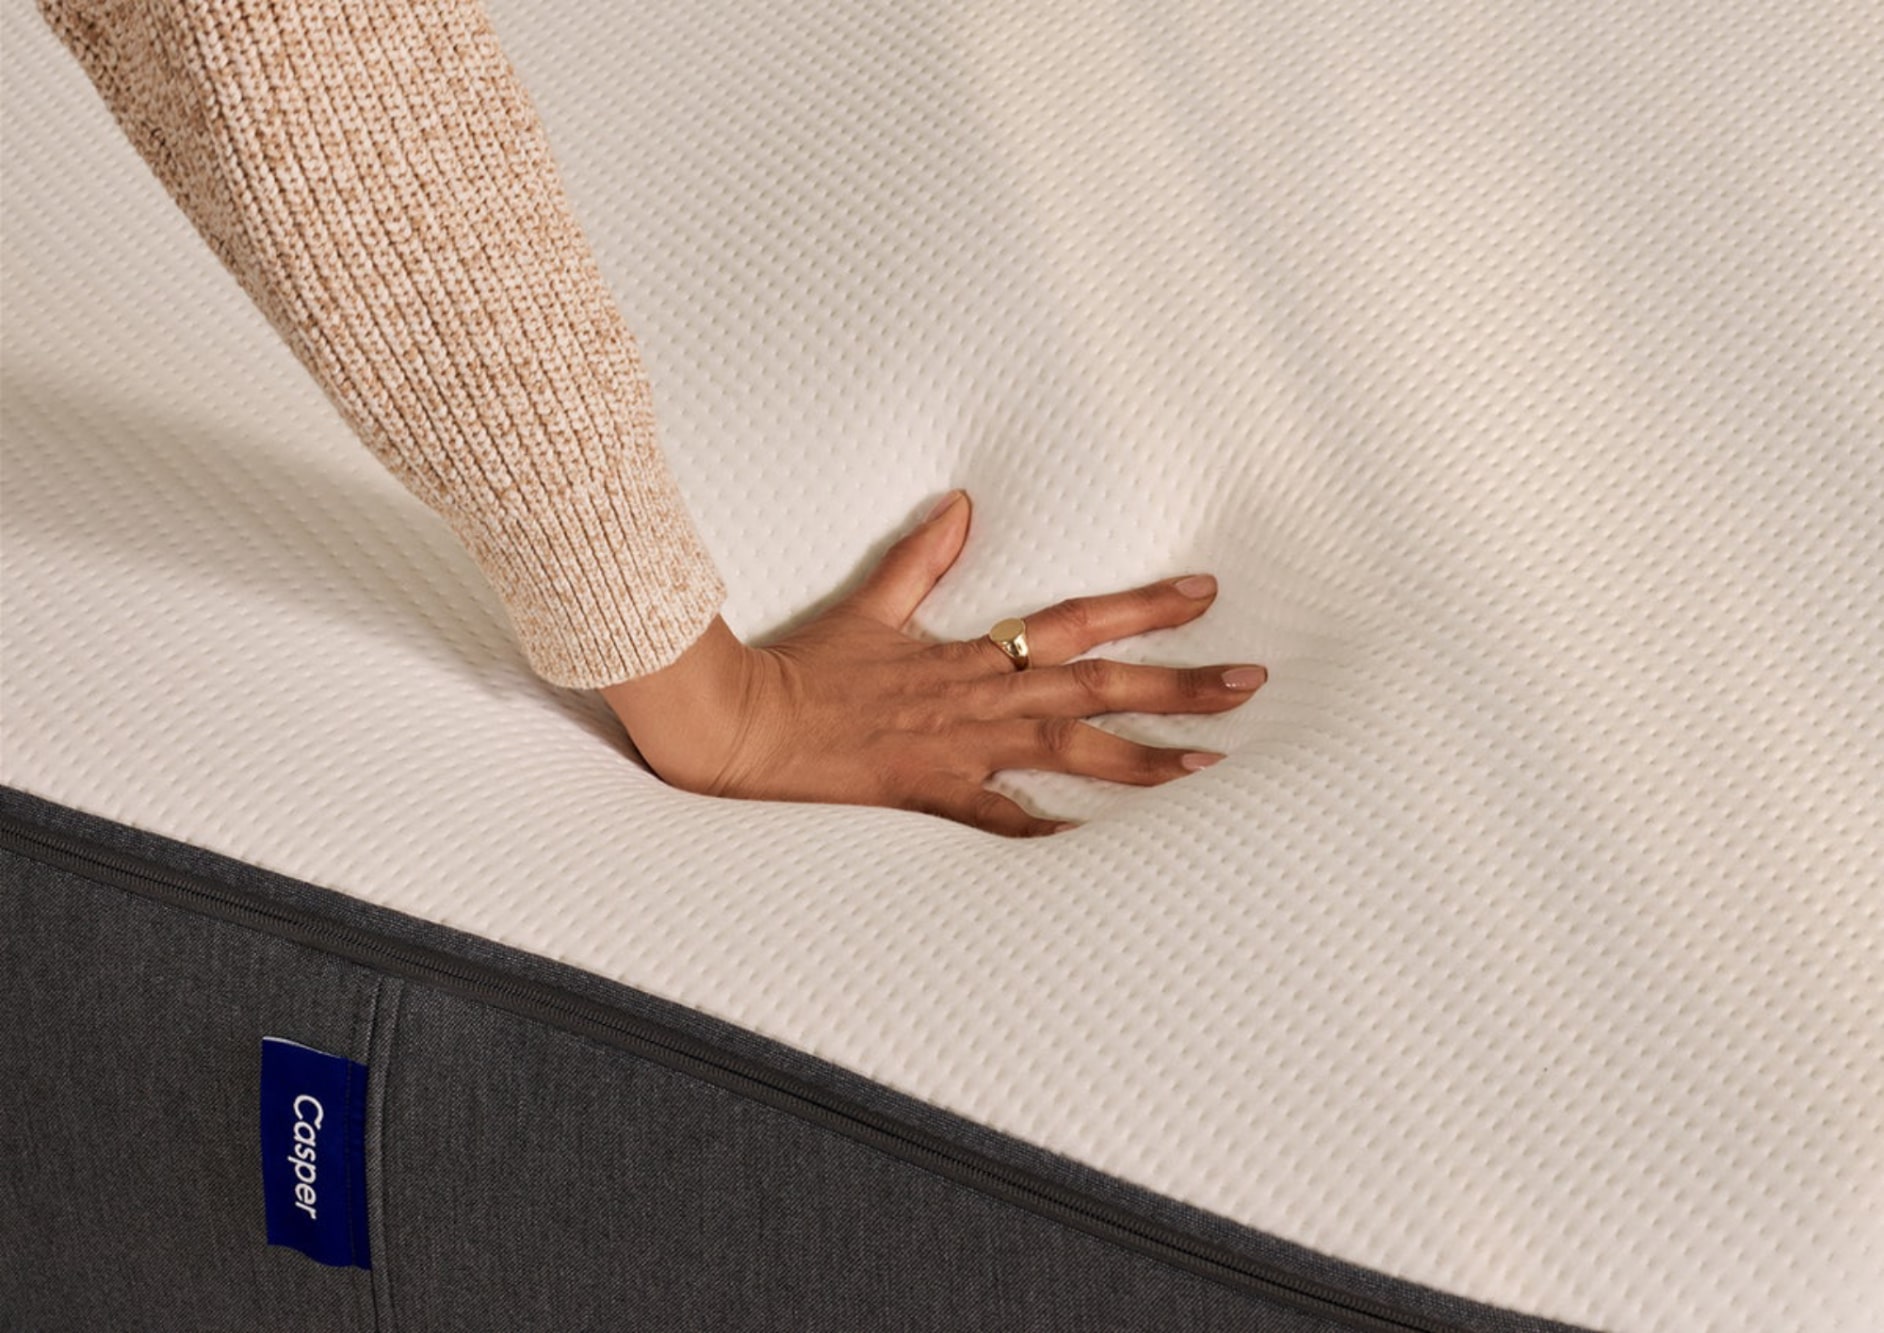 testing pressure relief on Casper mattress